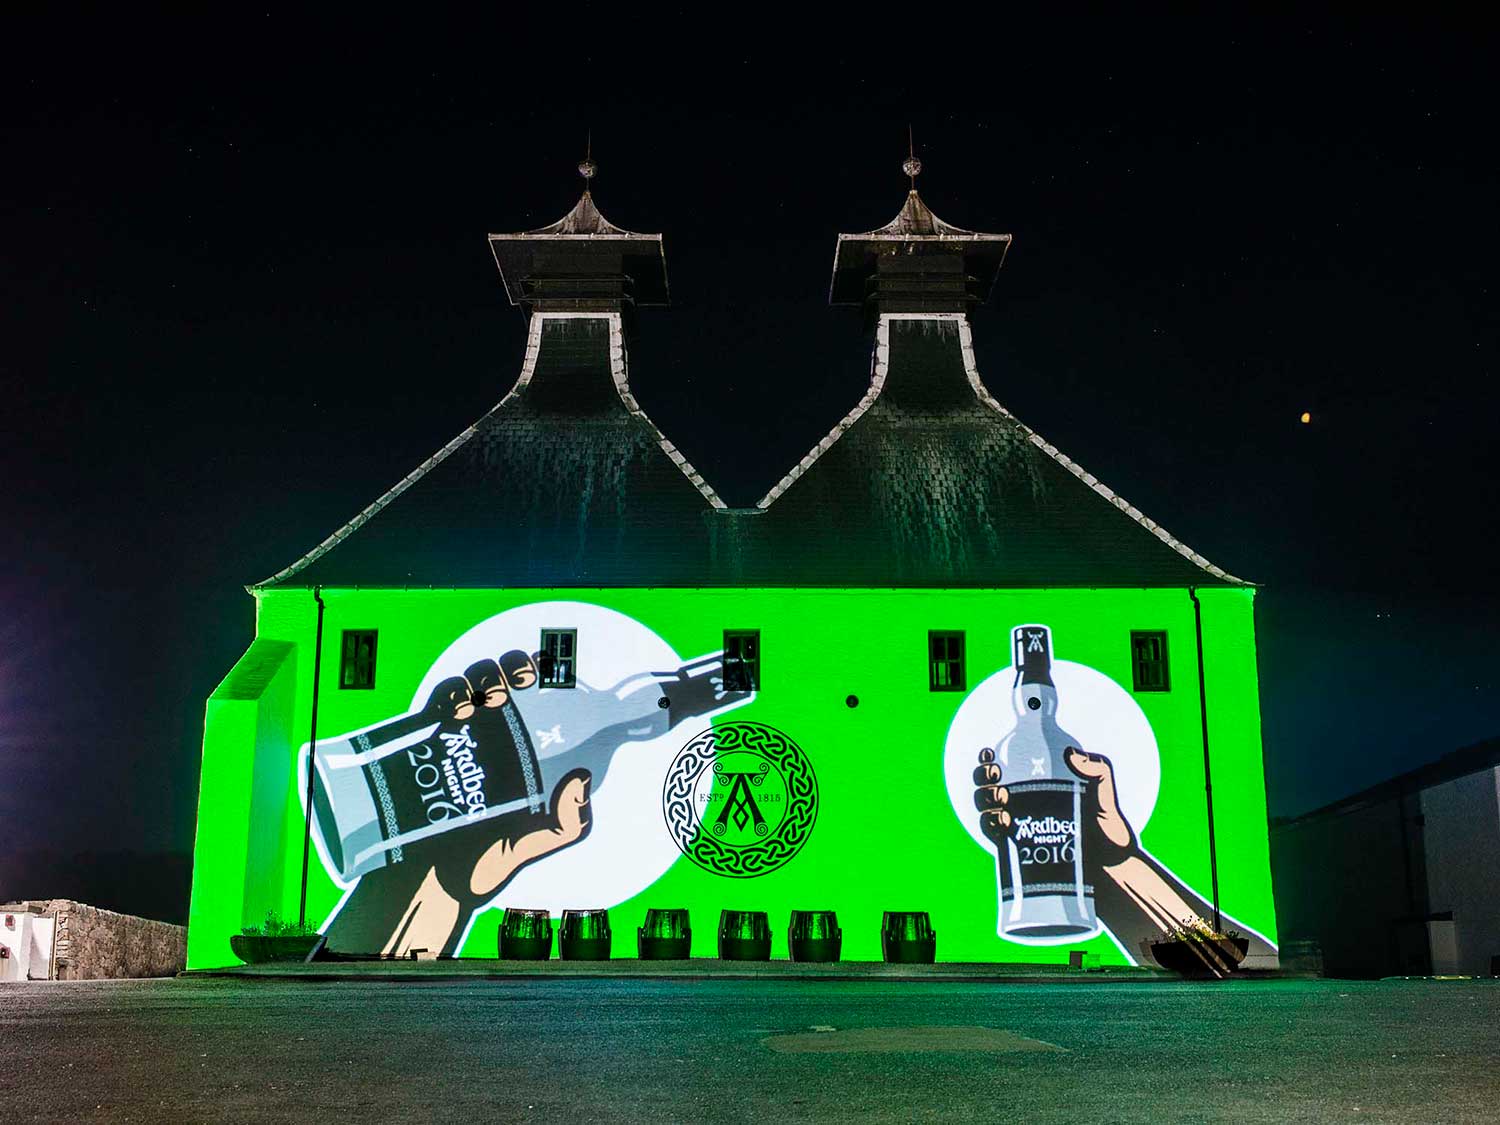 Ardbeg Marketing projection advertising on the distillery on Islay Projection Advertising